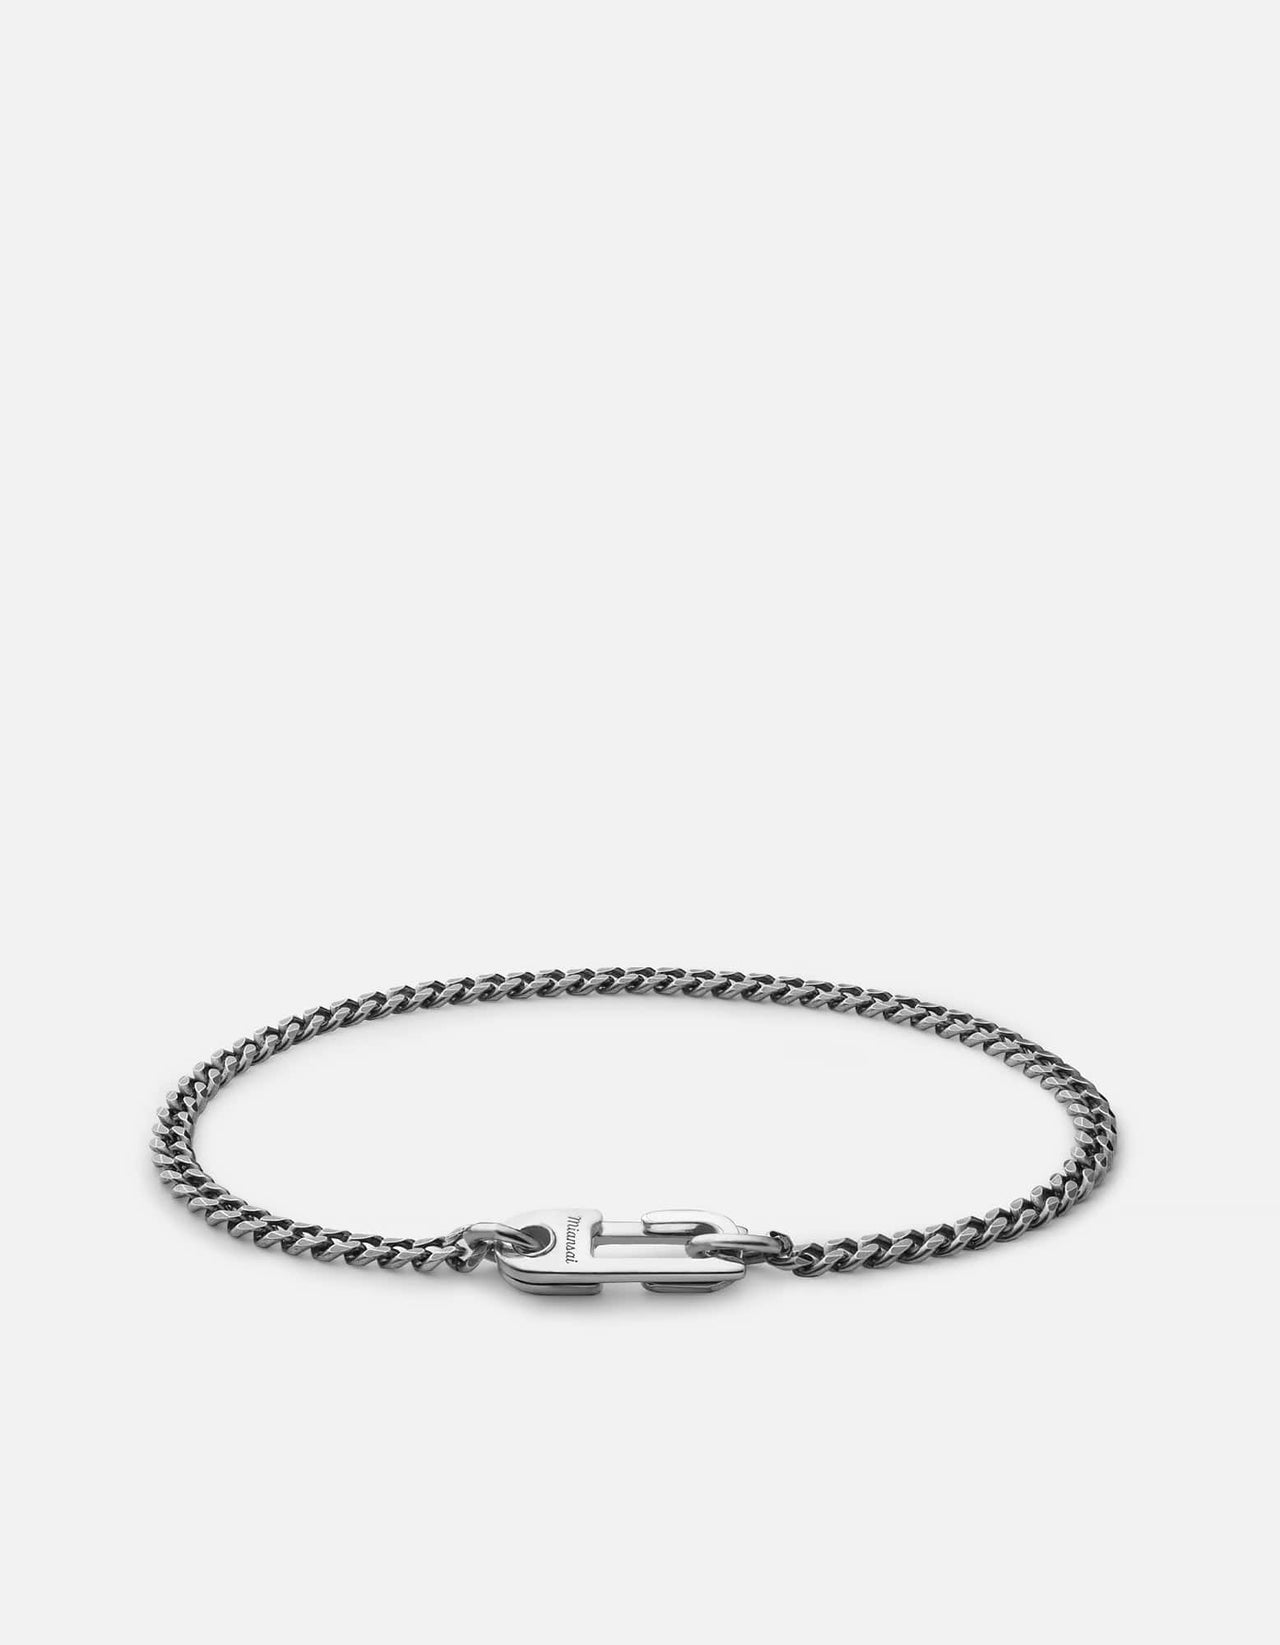 Sterling Silver Sterling Silver Link & Chain Bracelets